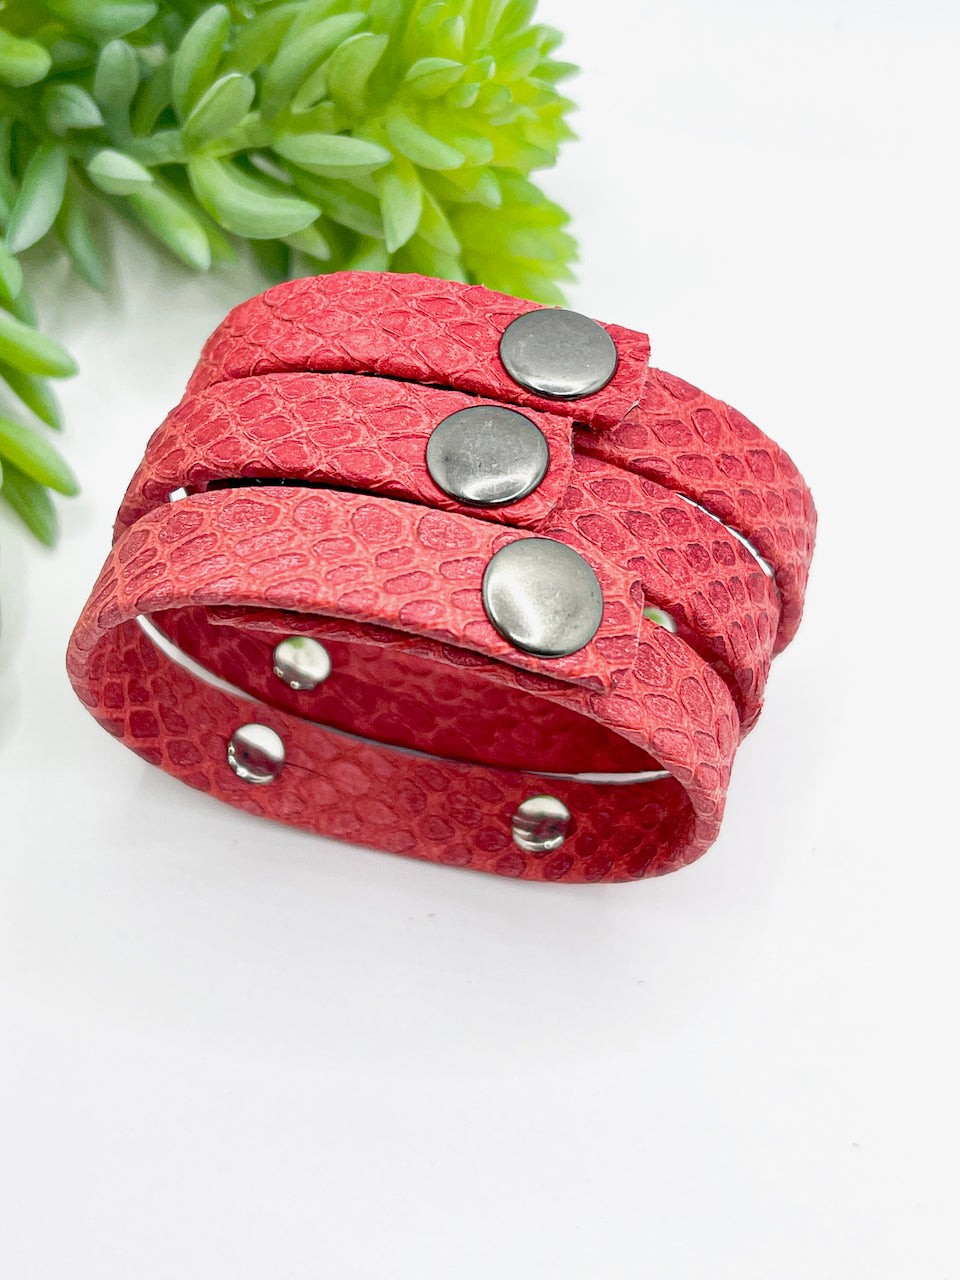 Crimson Red | 7 Phrases | Leather Skinny Bracelet | Adjustable Skinny Bracelets Create Hope Cuffs 